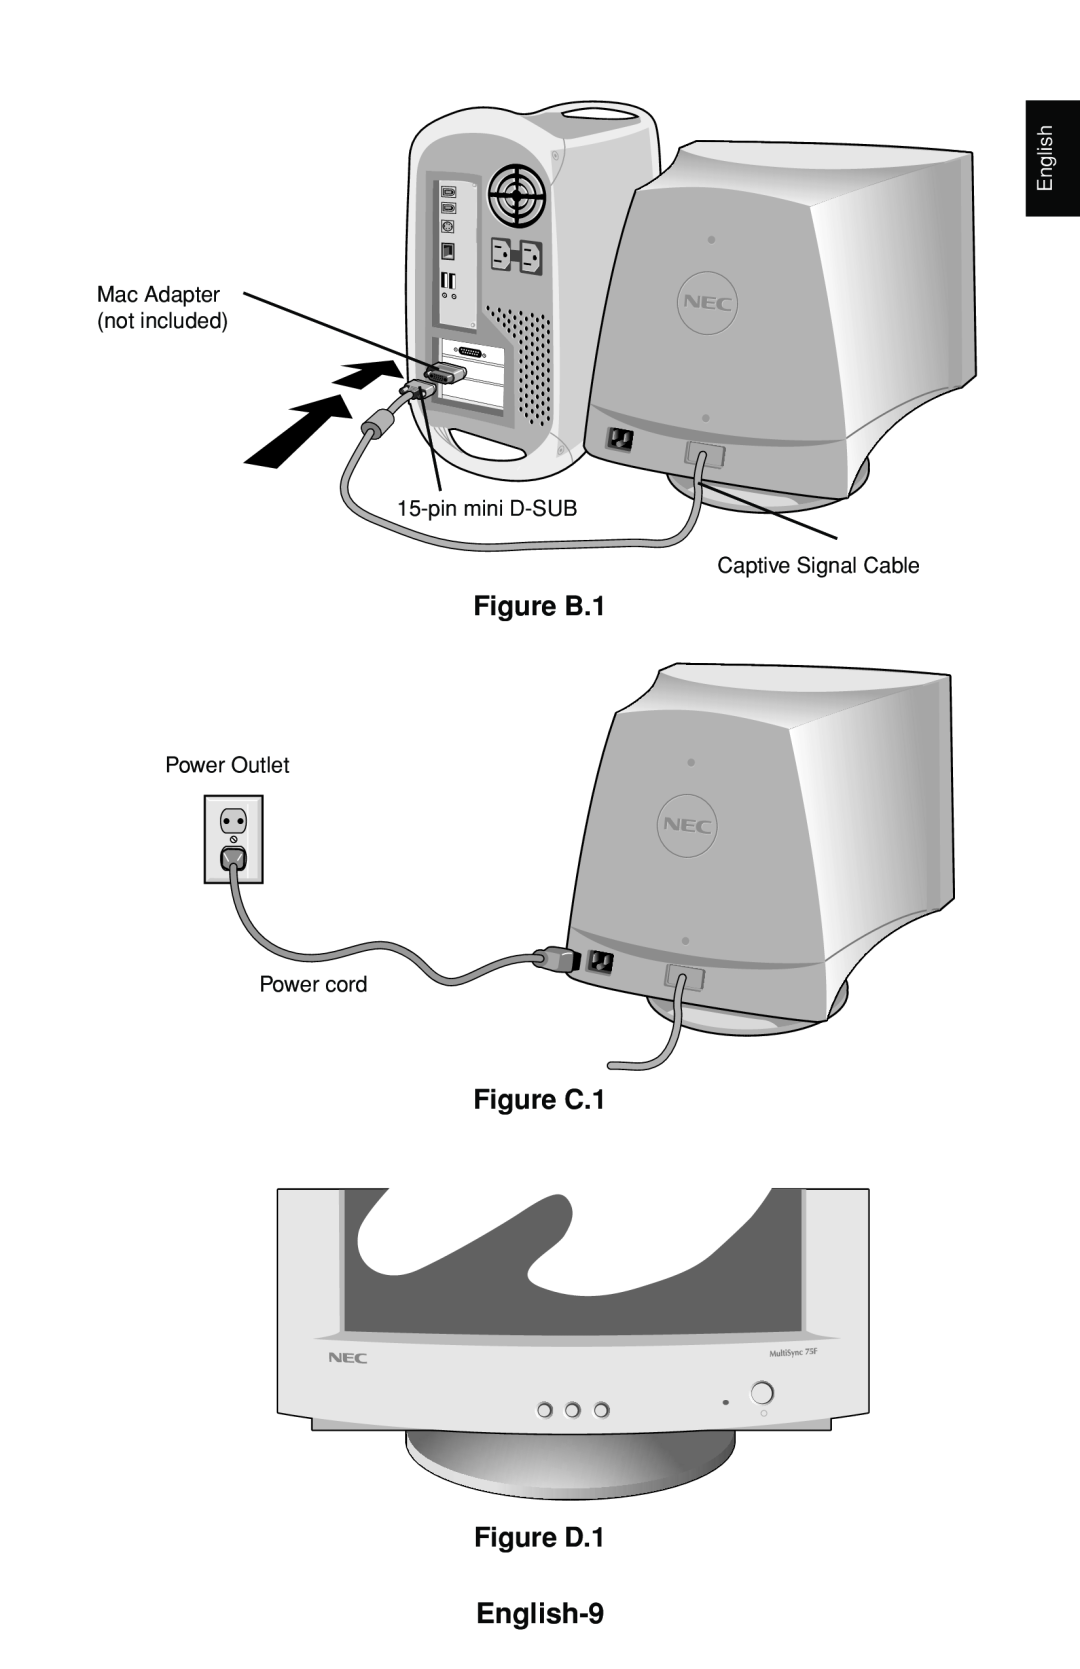 NEC MultiSync 75F user manual English-9, Figure B.1, Figure C.1 Figure D.1 